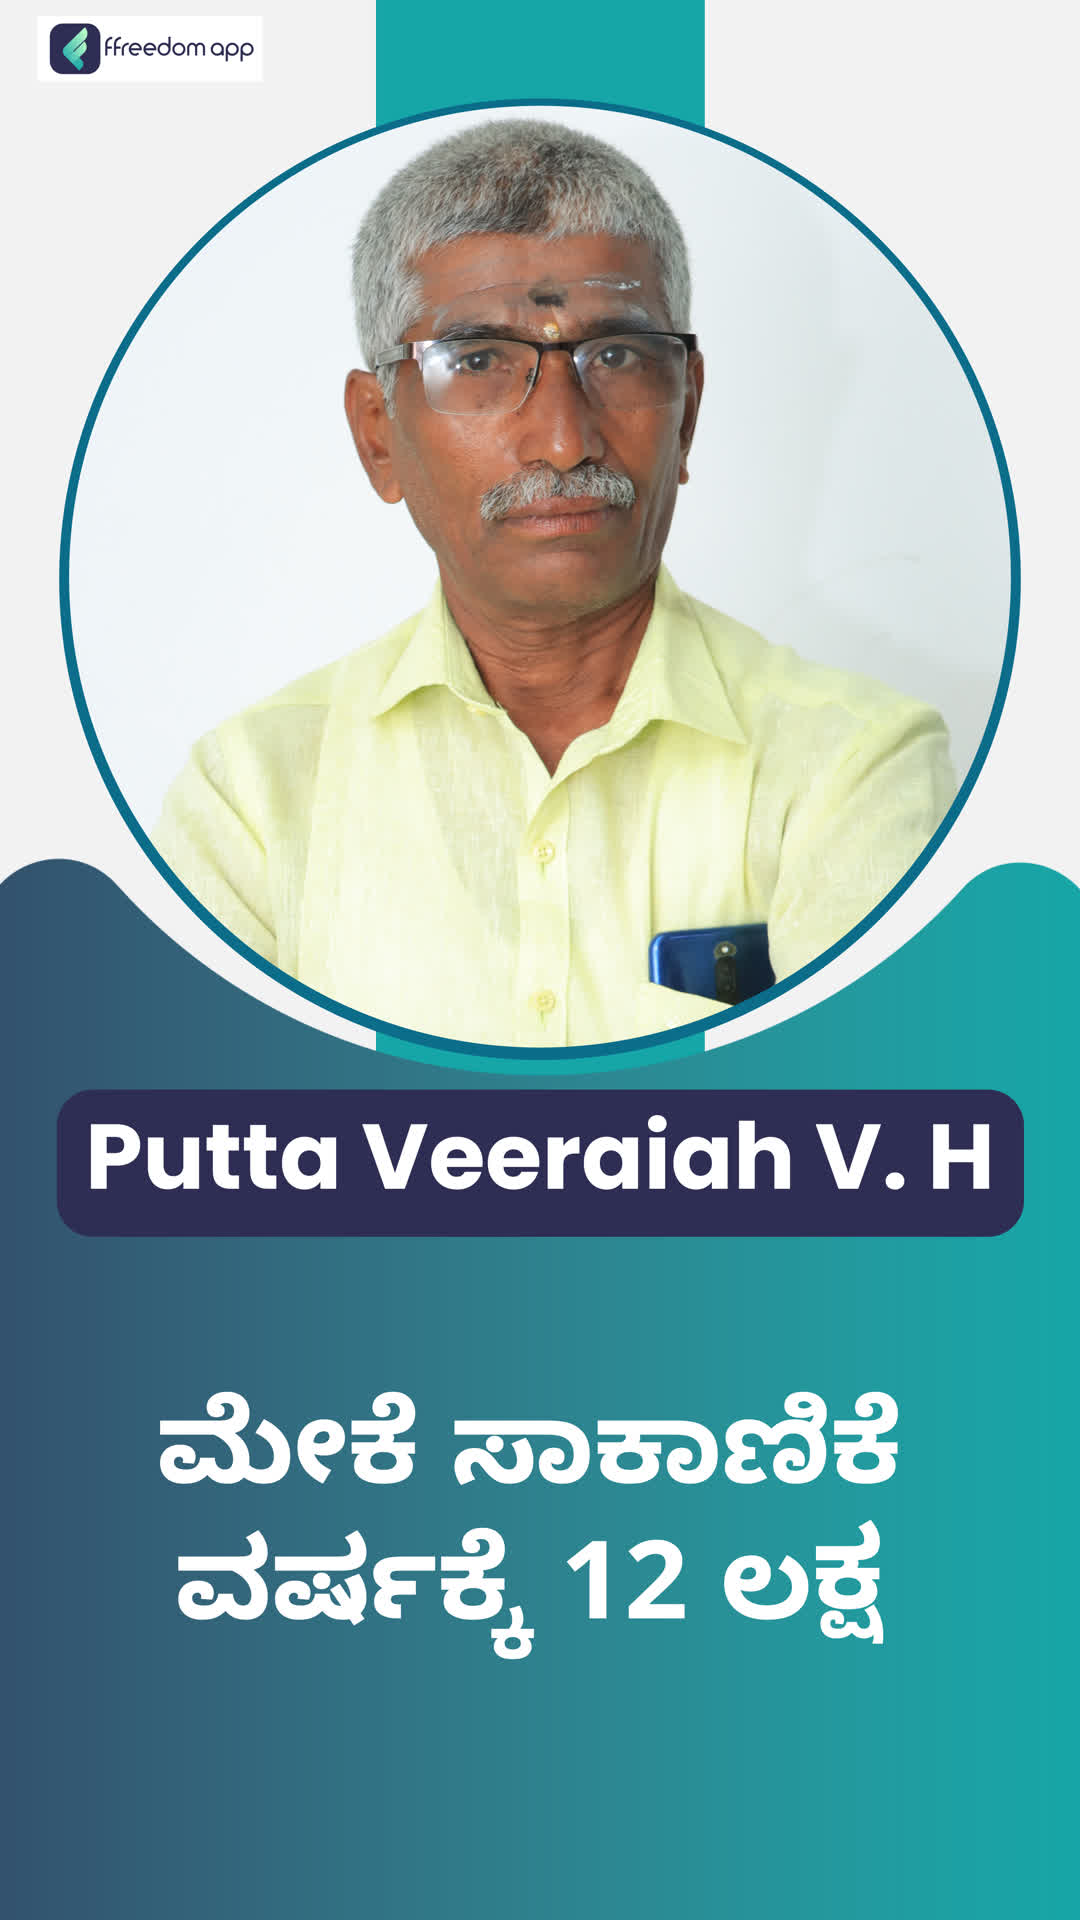 putta veeraiah vh   's Honest Review of ffreedom app - Ramanagara ,Karnataka